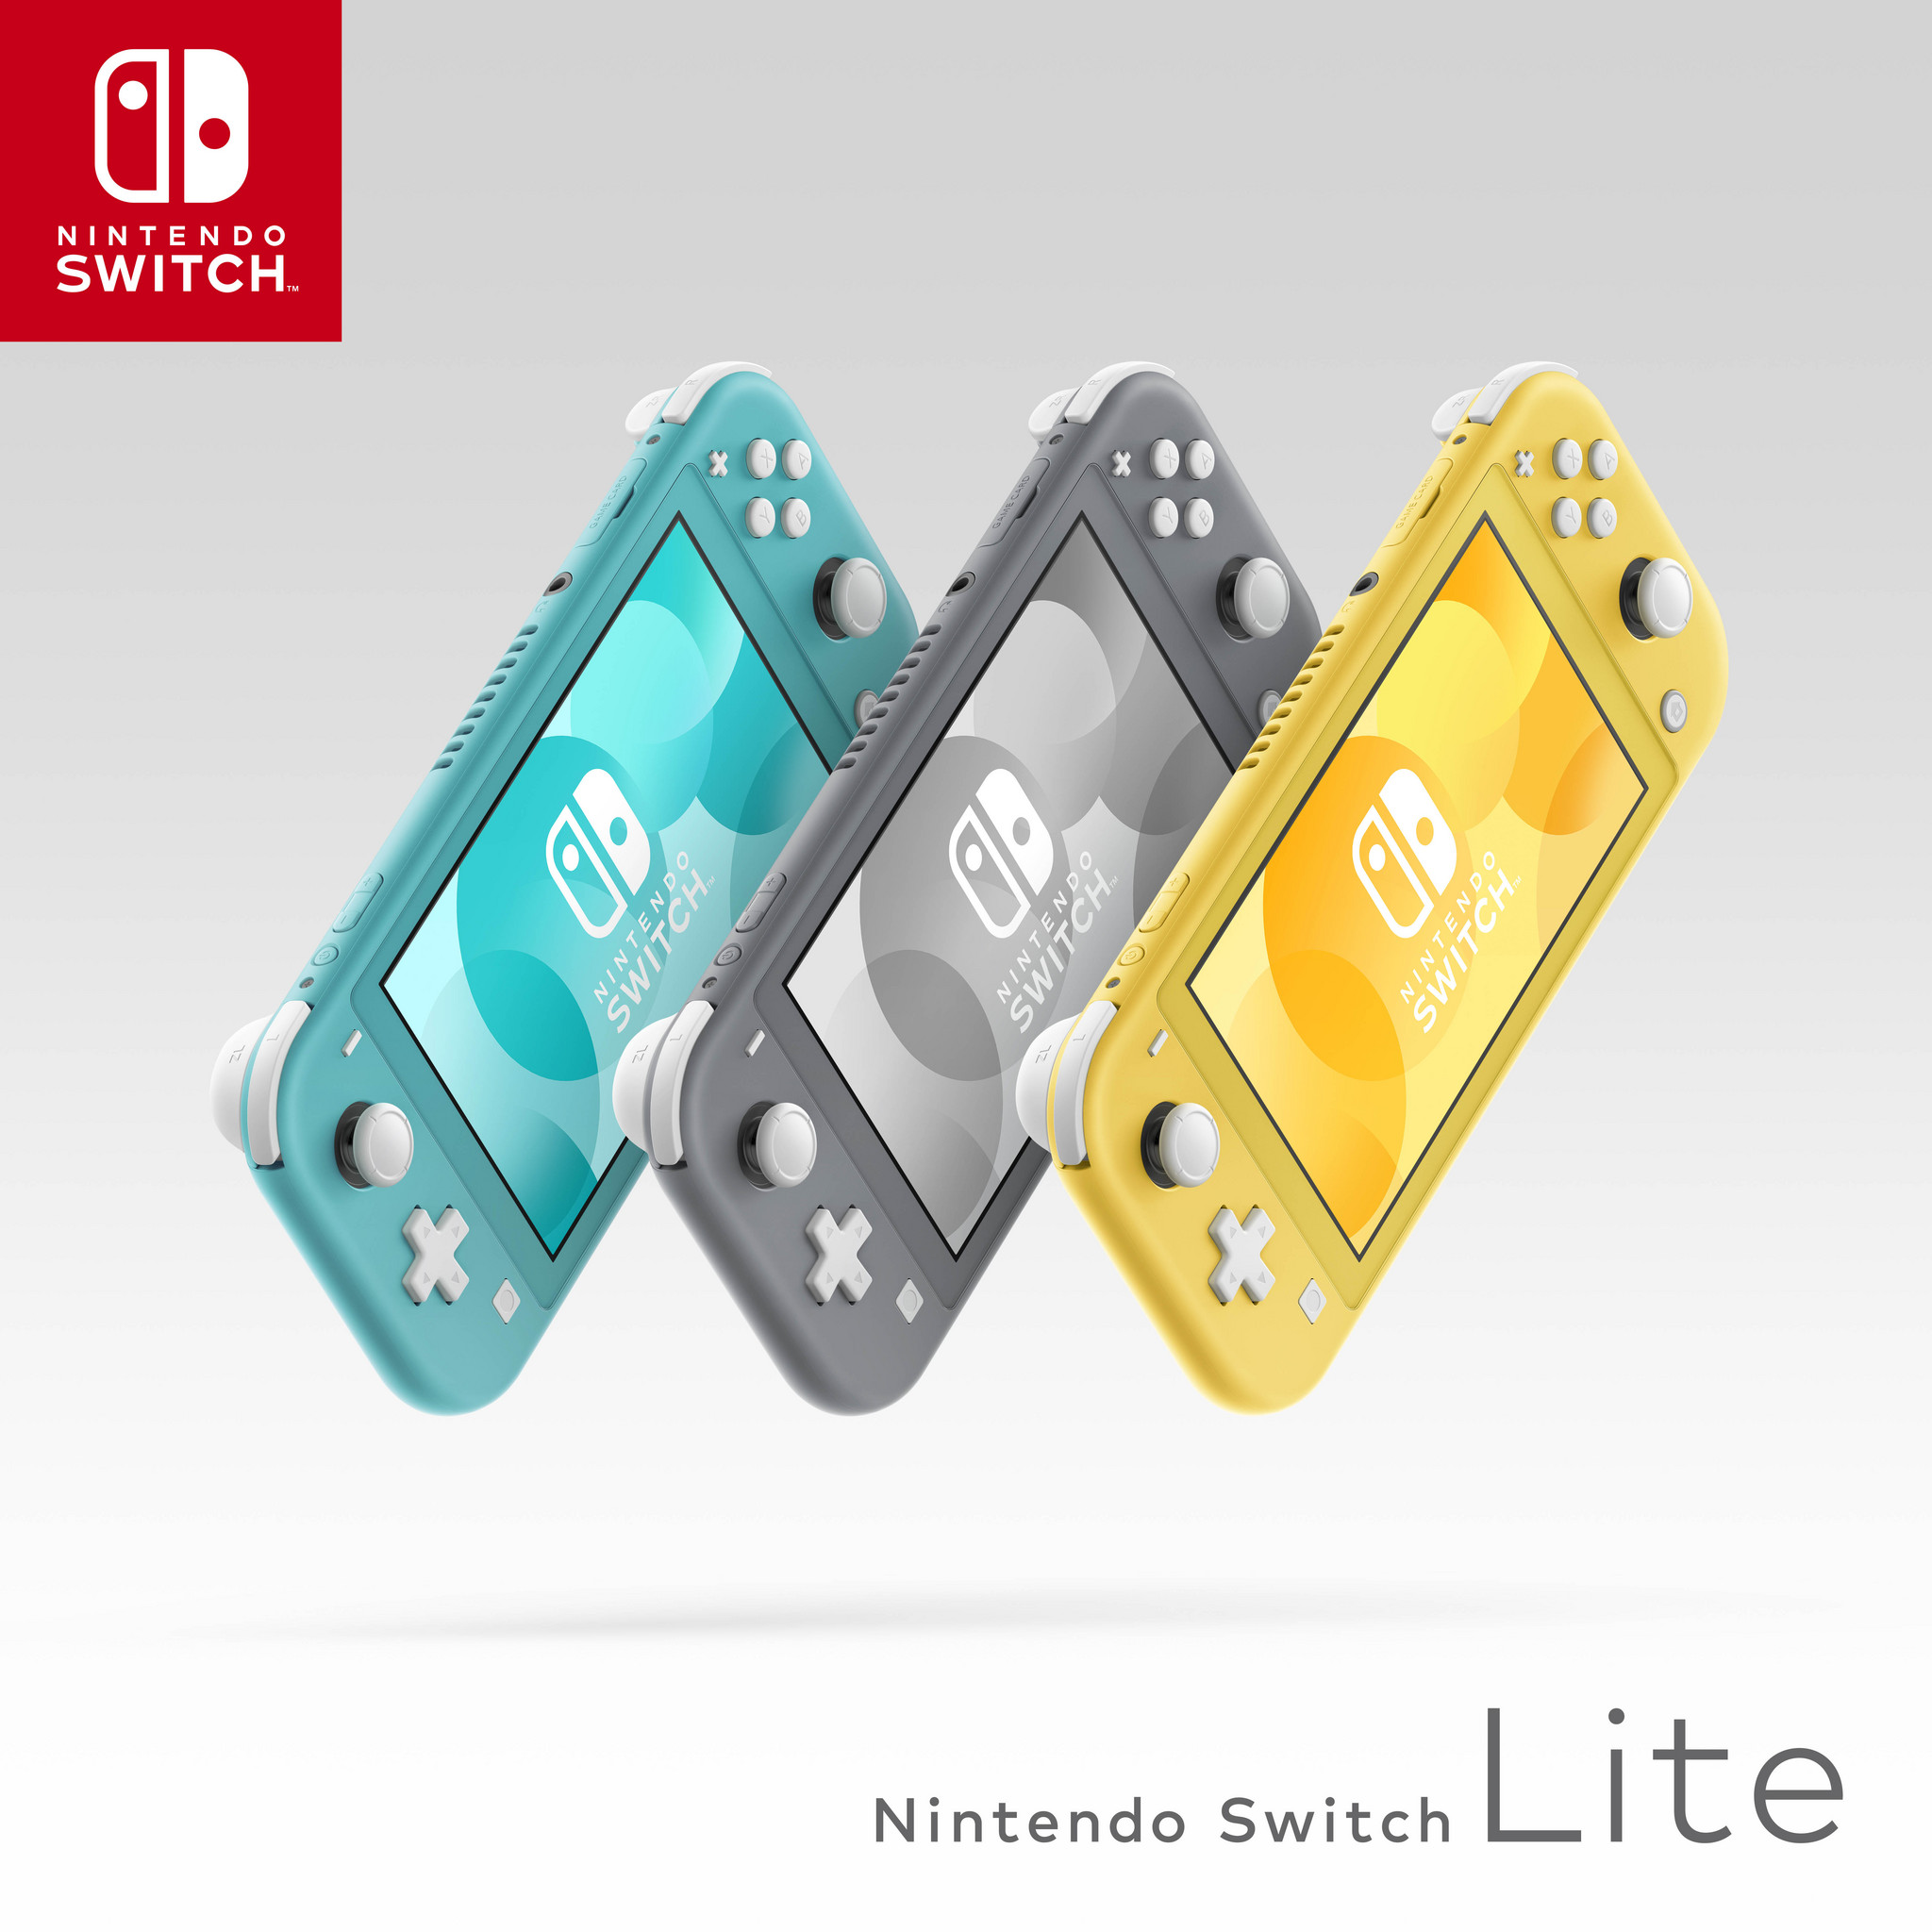 Nintendo Switch Lite img1.jpg